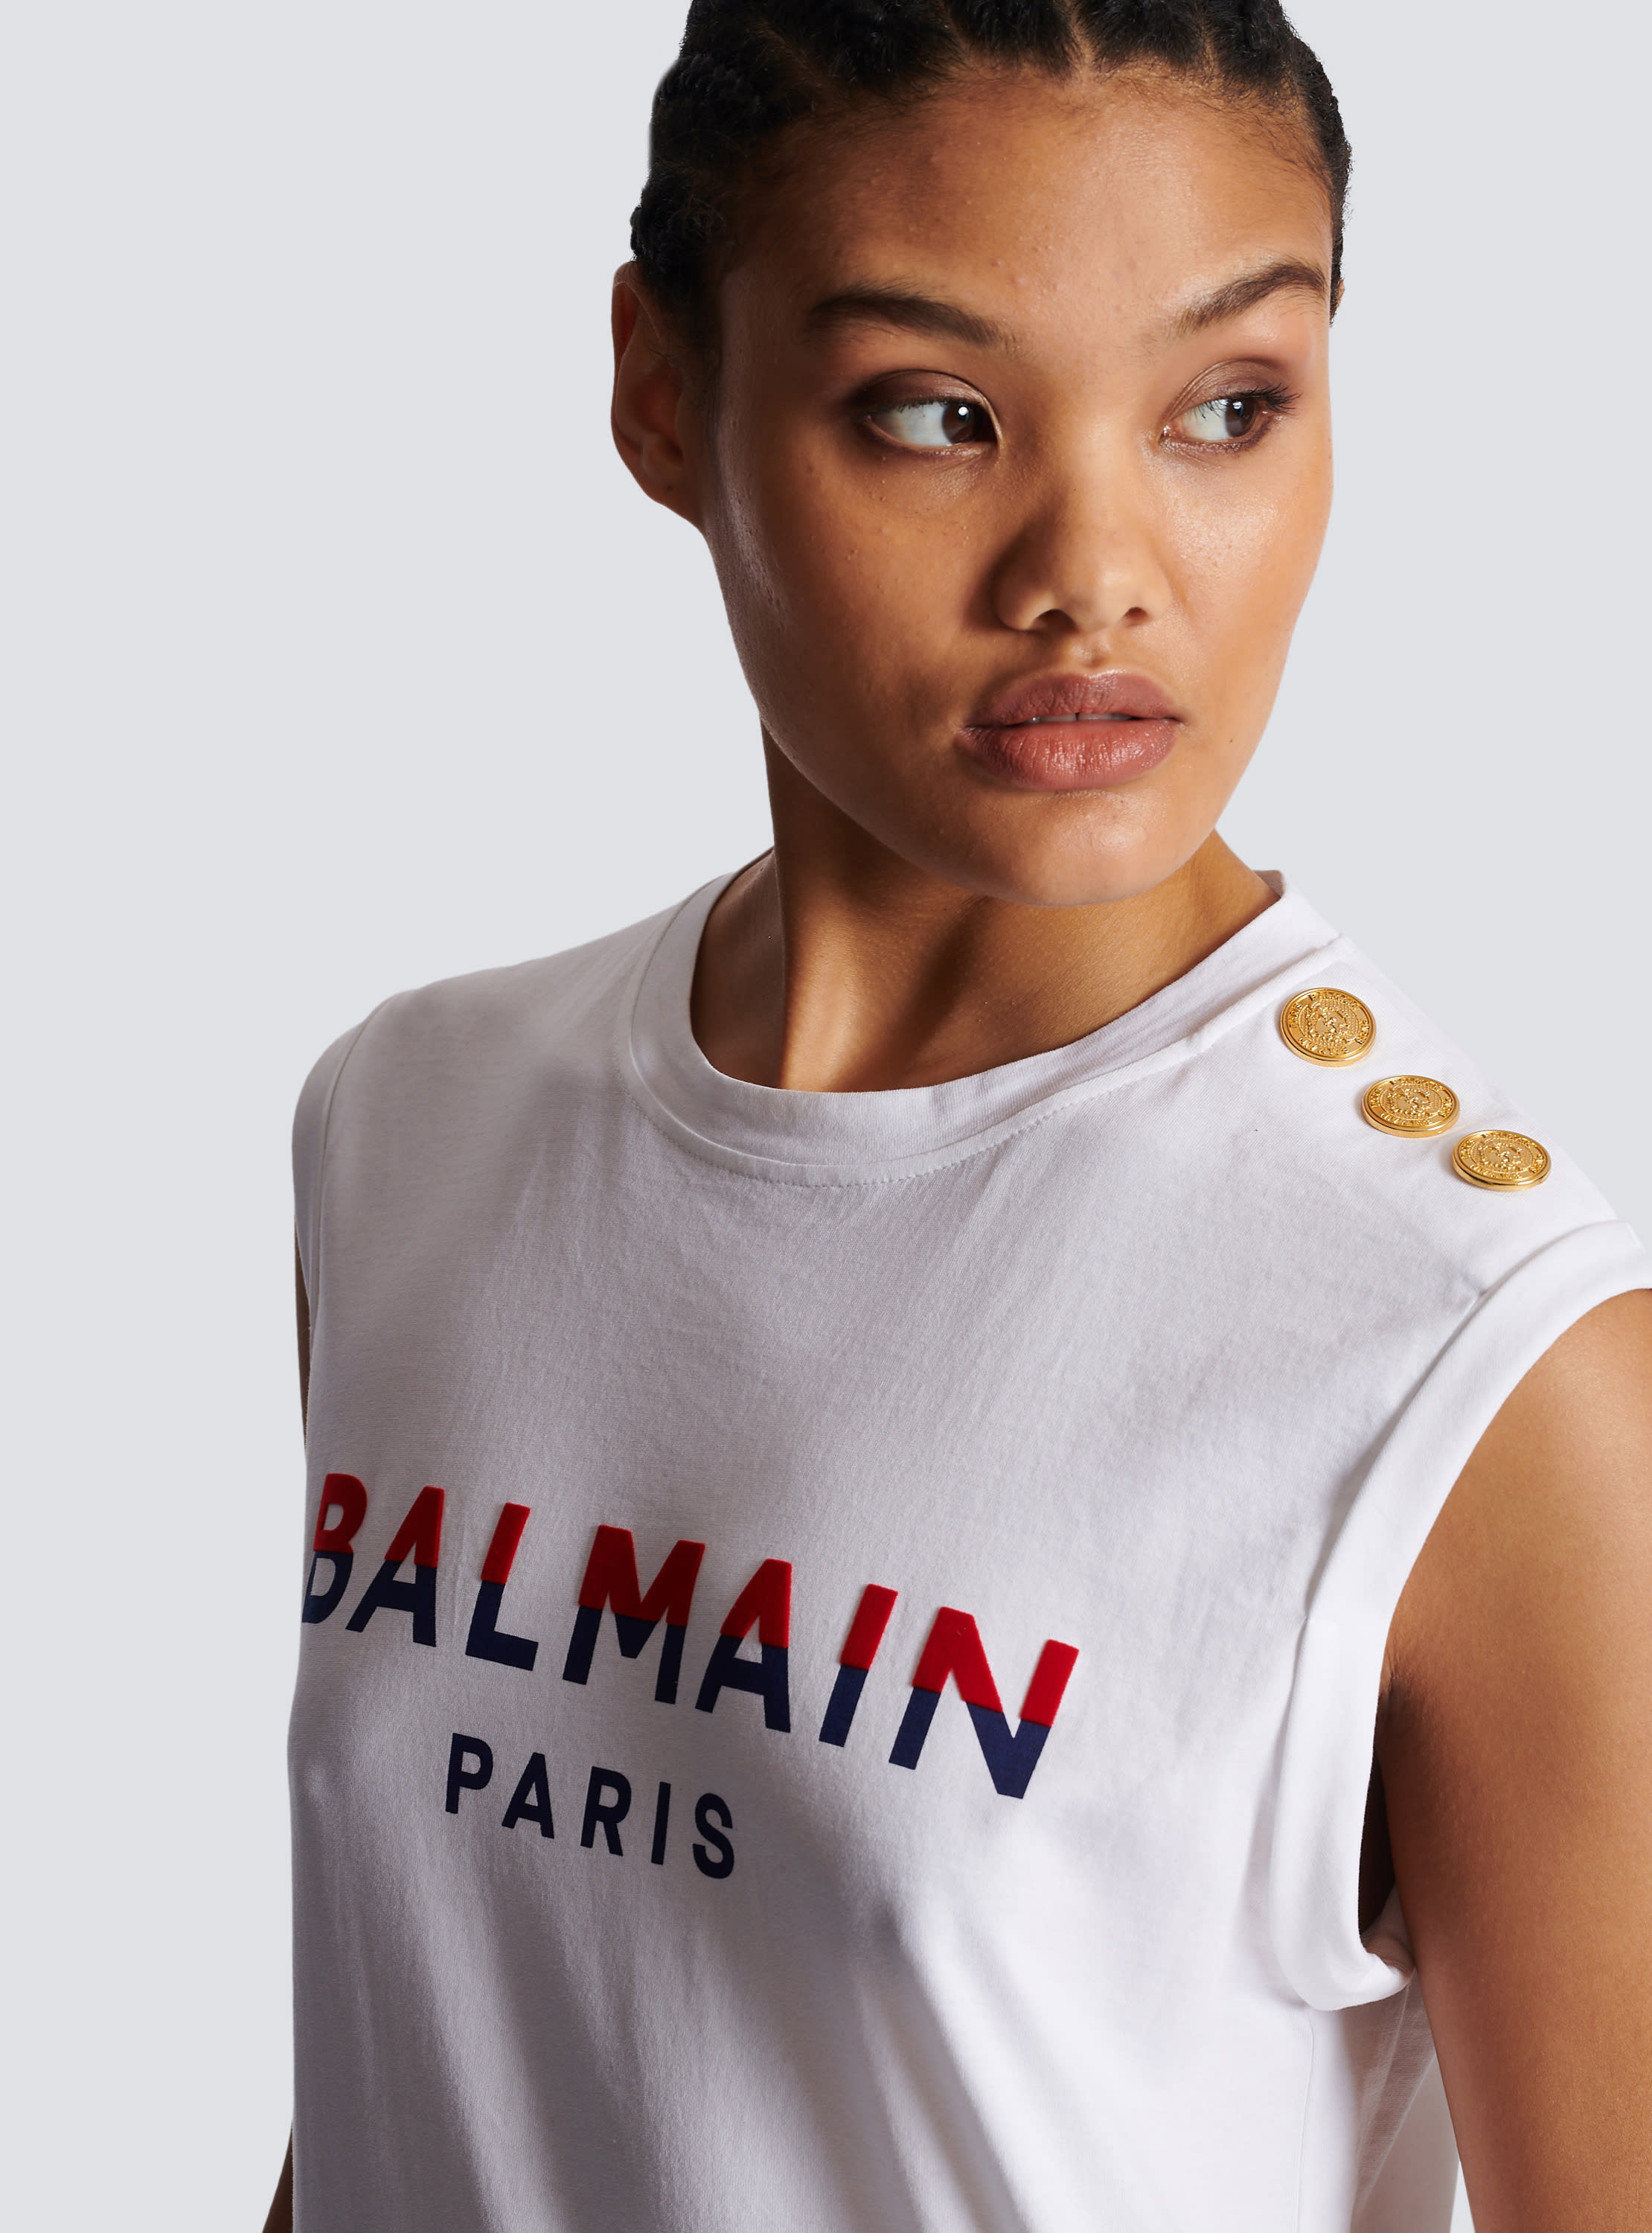 Flocked Balmain Paris T-Shirt - Women |